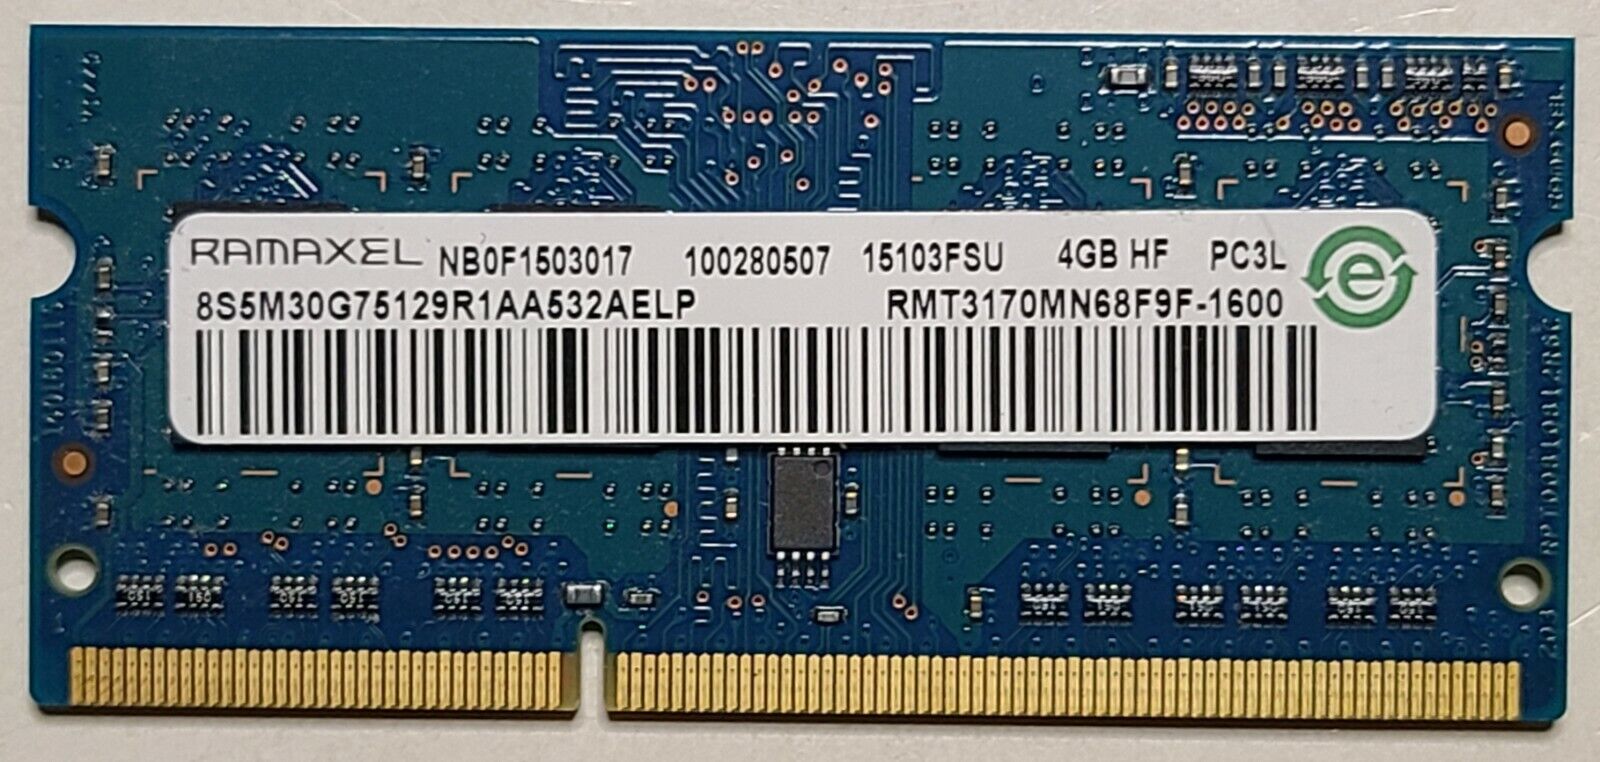 GENUINE Lenovo G70-80 G50-45 MEMORY RAM 4GB DDR3 PC3-12800 NB0F1503017 5M30G7512